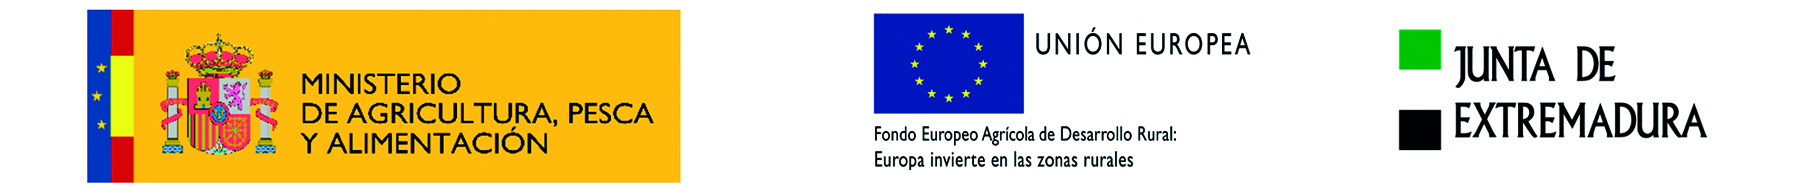 LOGO MINISTERIO DE AGRICULTURA, PESCA Y ALIMENTACION - UNION EUROPEA - JUNTA DE EXTREMADURA